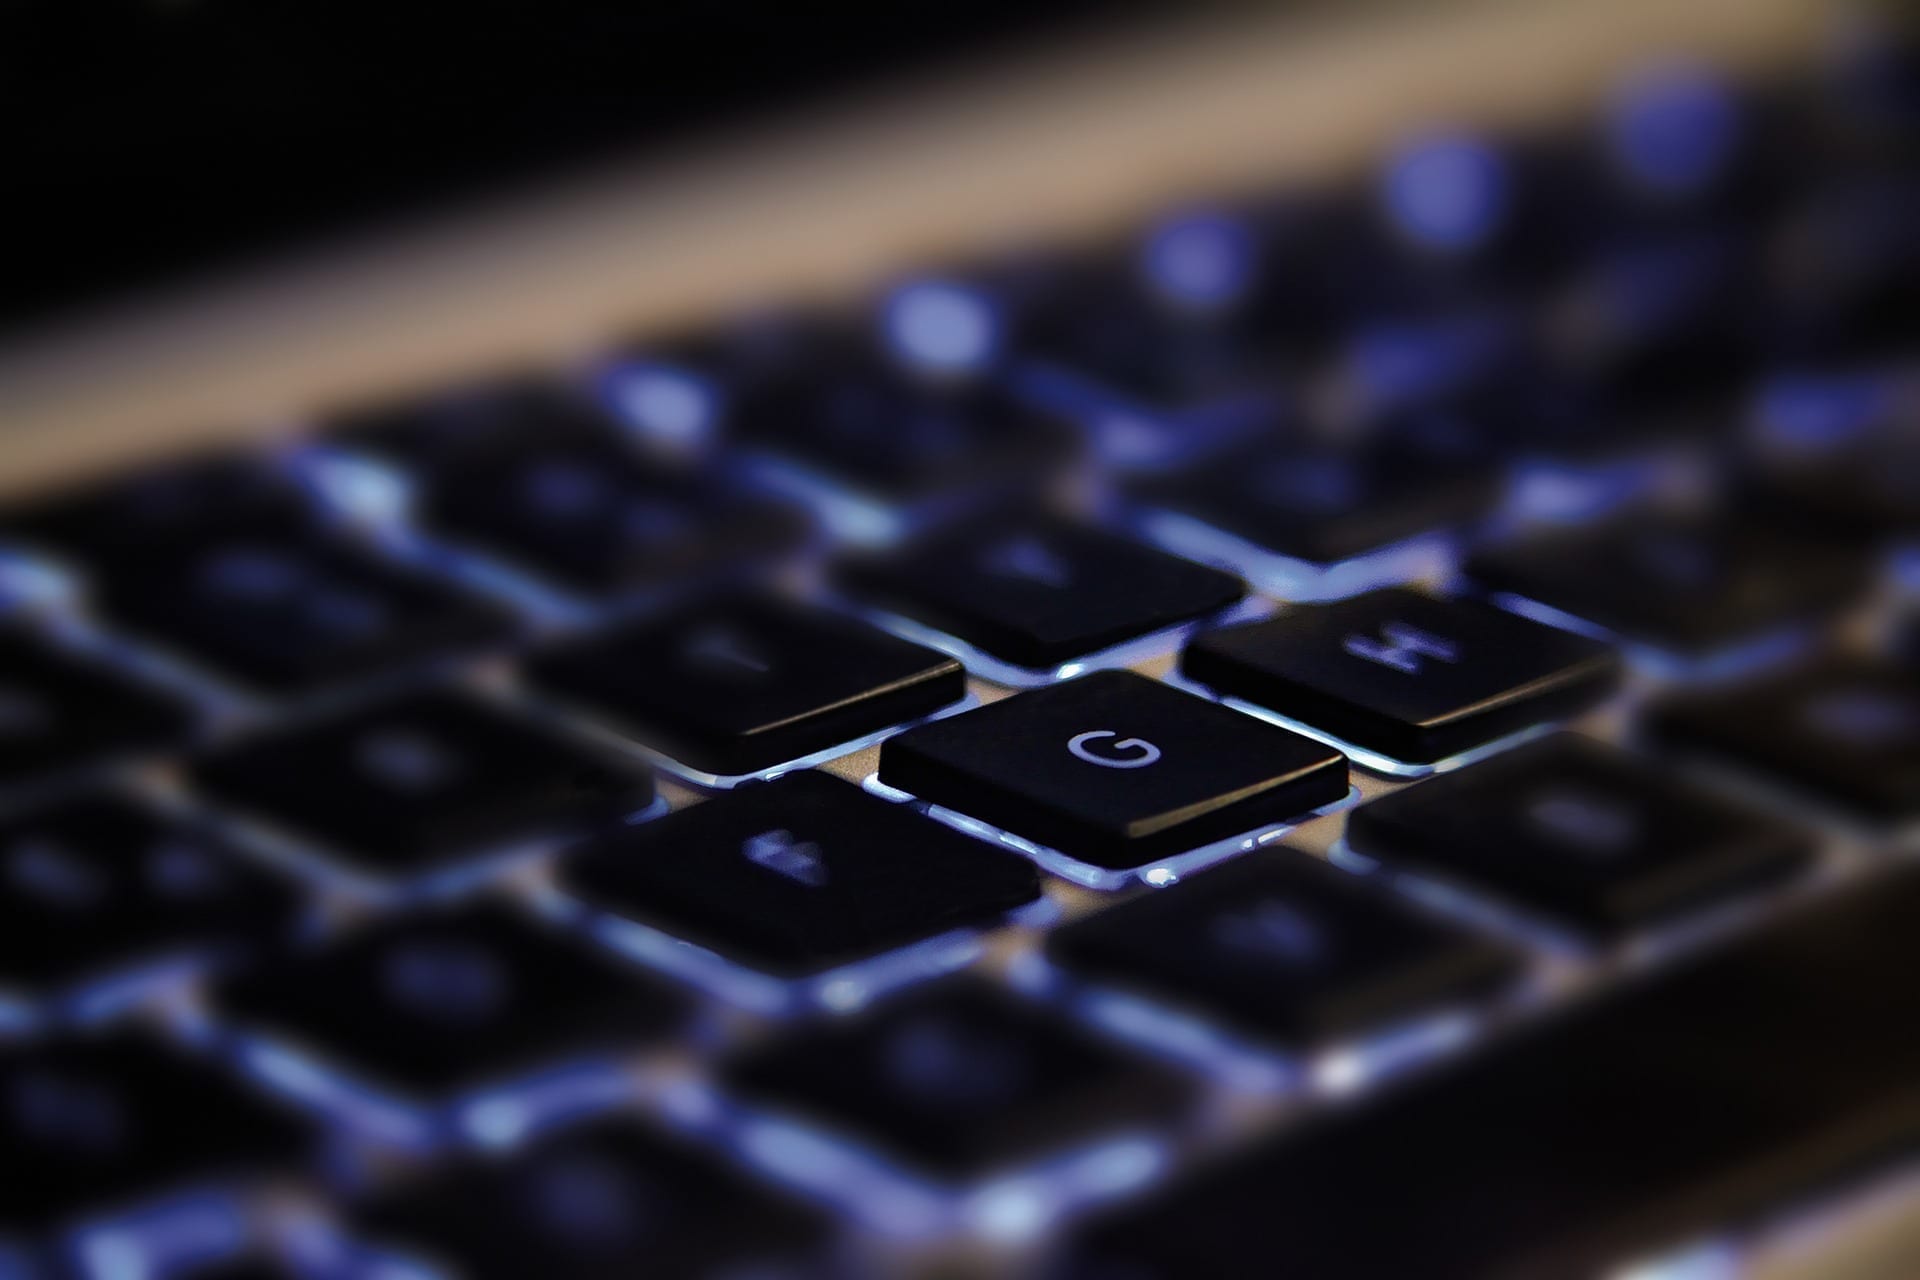 Computer keyboard with backlit keys; image by Pixies, via Pixabay, CC0.